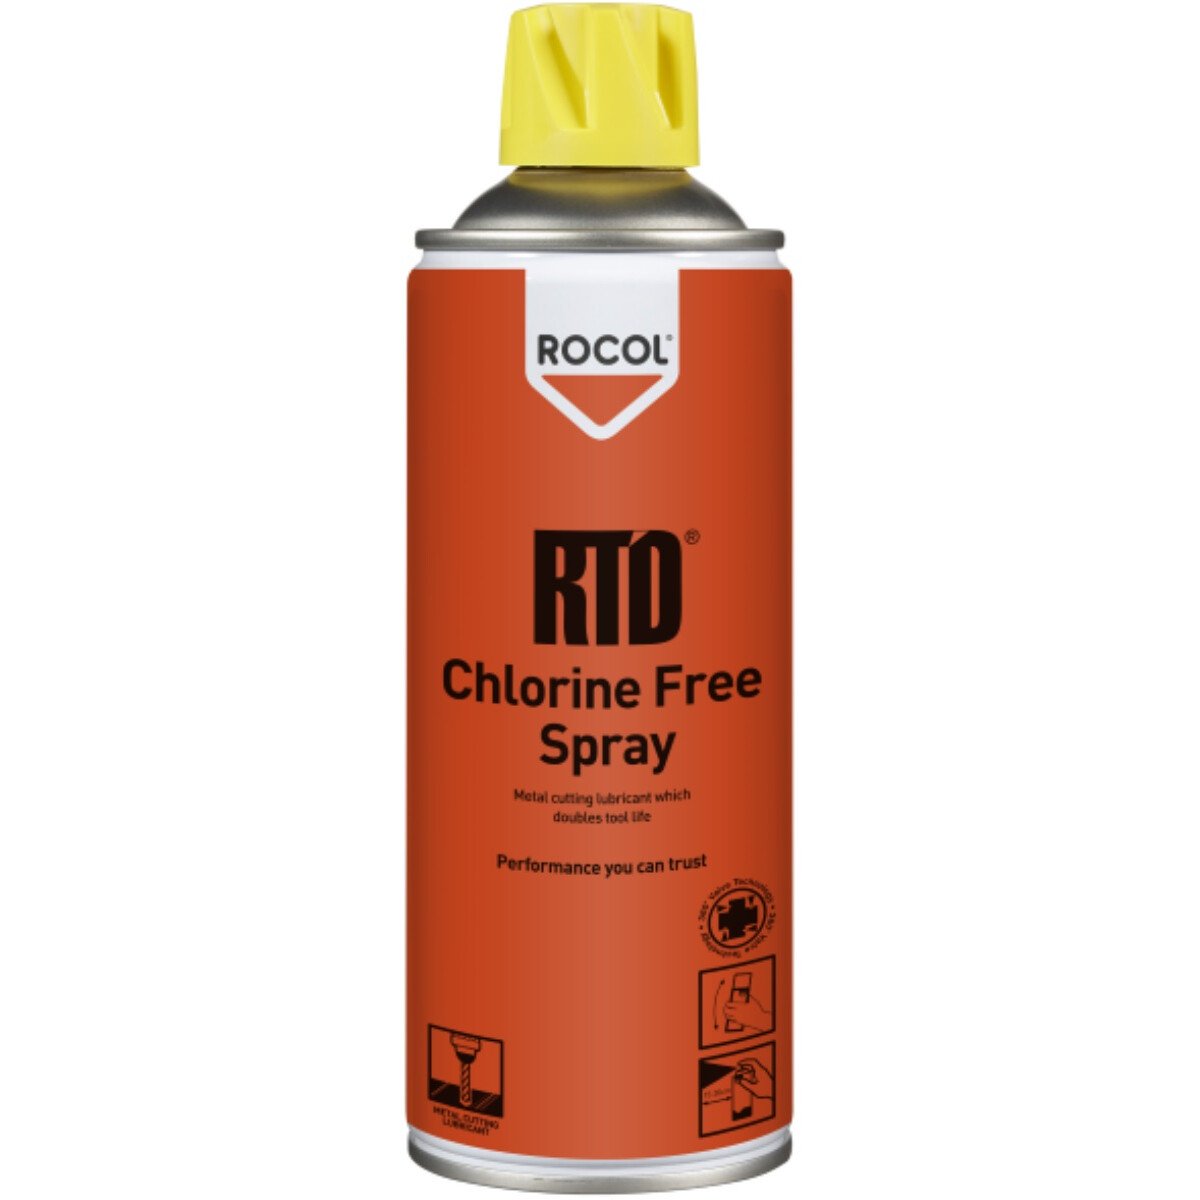 Rocol 53081 RTD Chlorine Free Spray 400ml (Pack of 12)